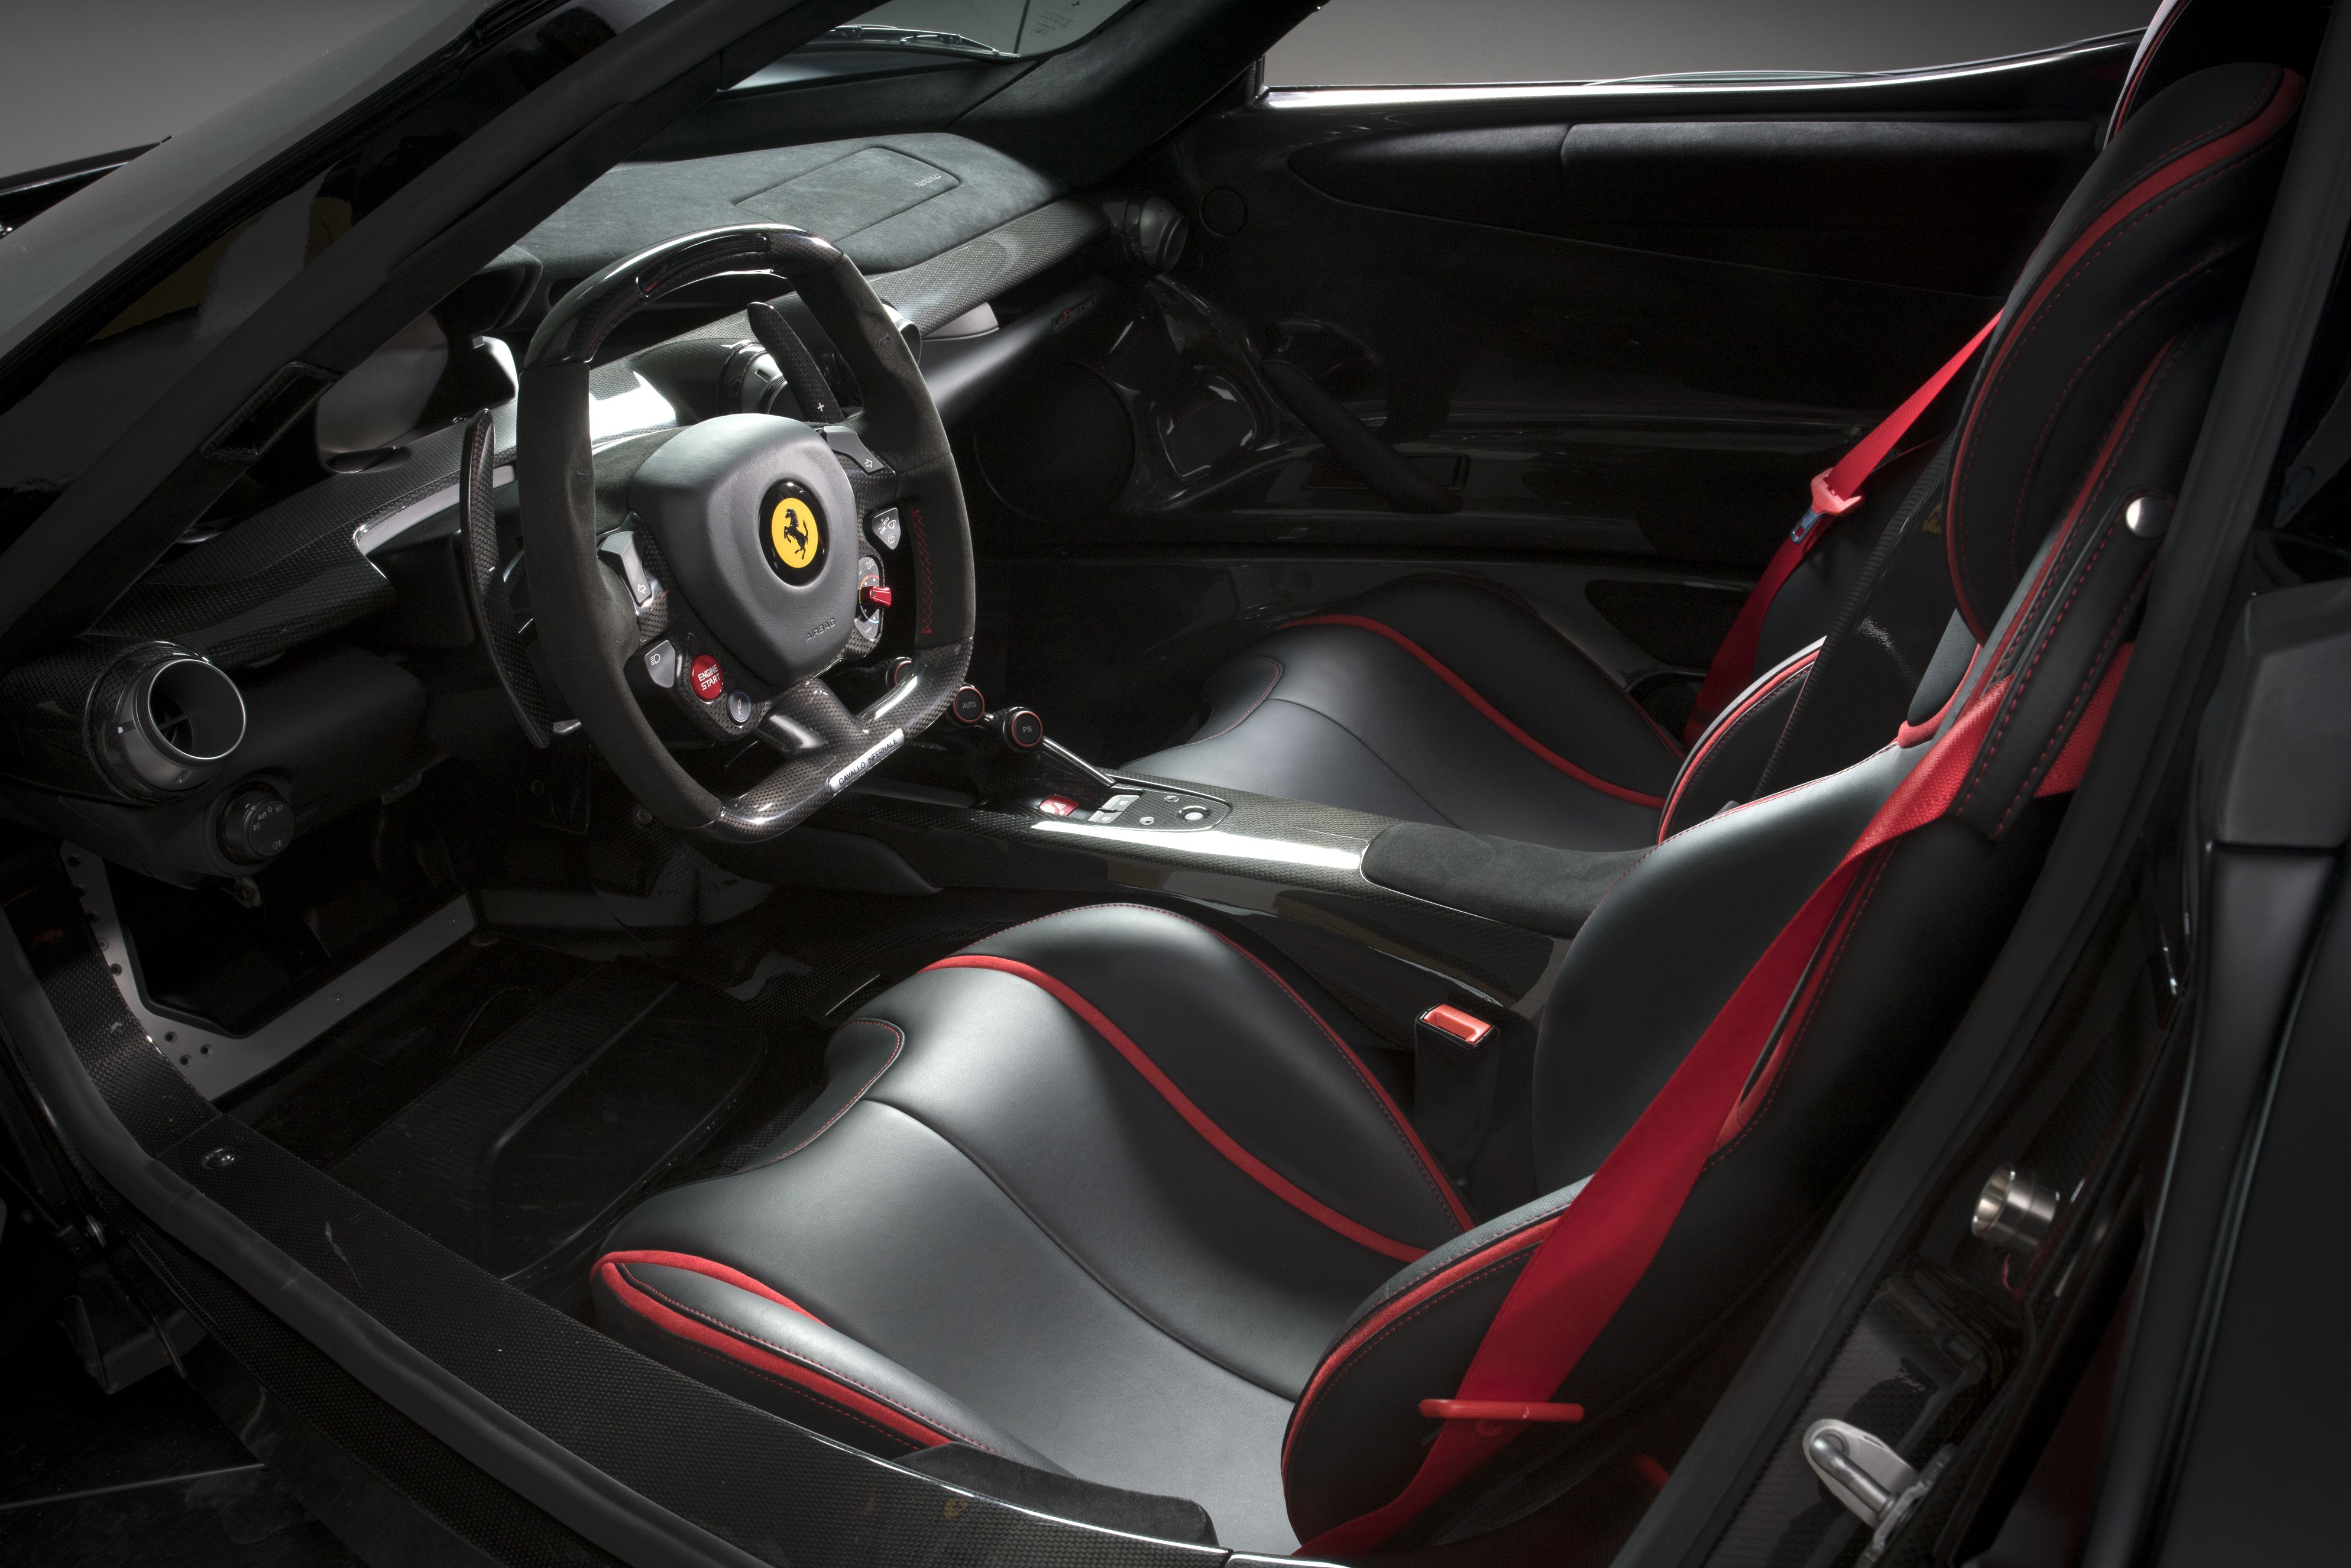 Ferrari LaFerrari for Sale - How Much Will This Ferrari Cost at